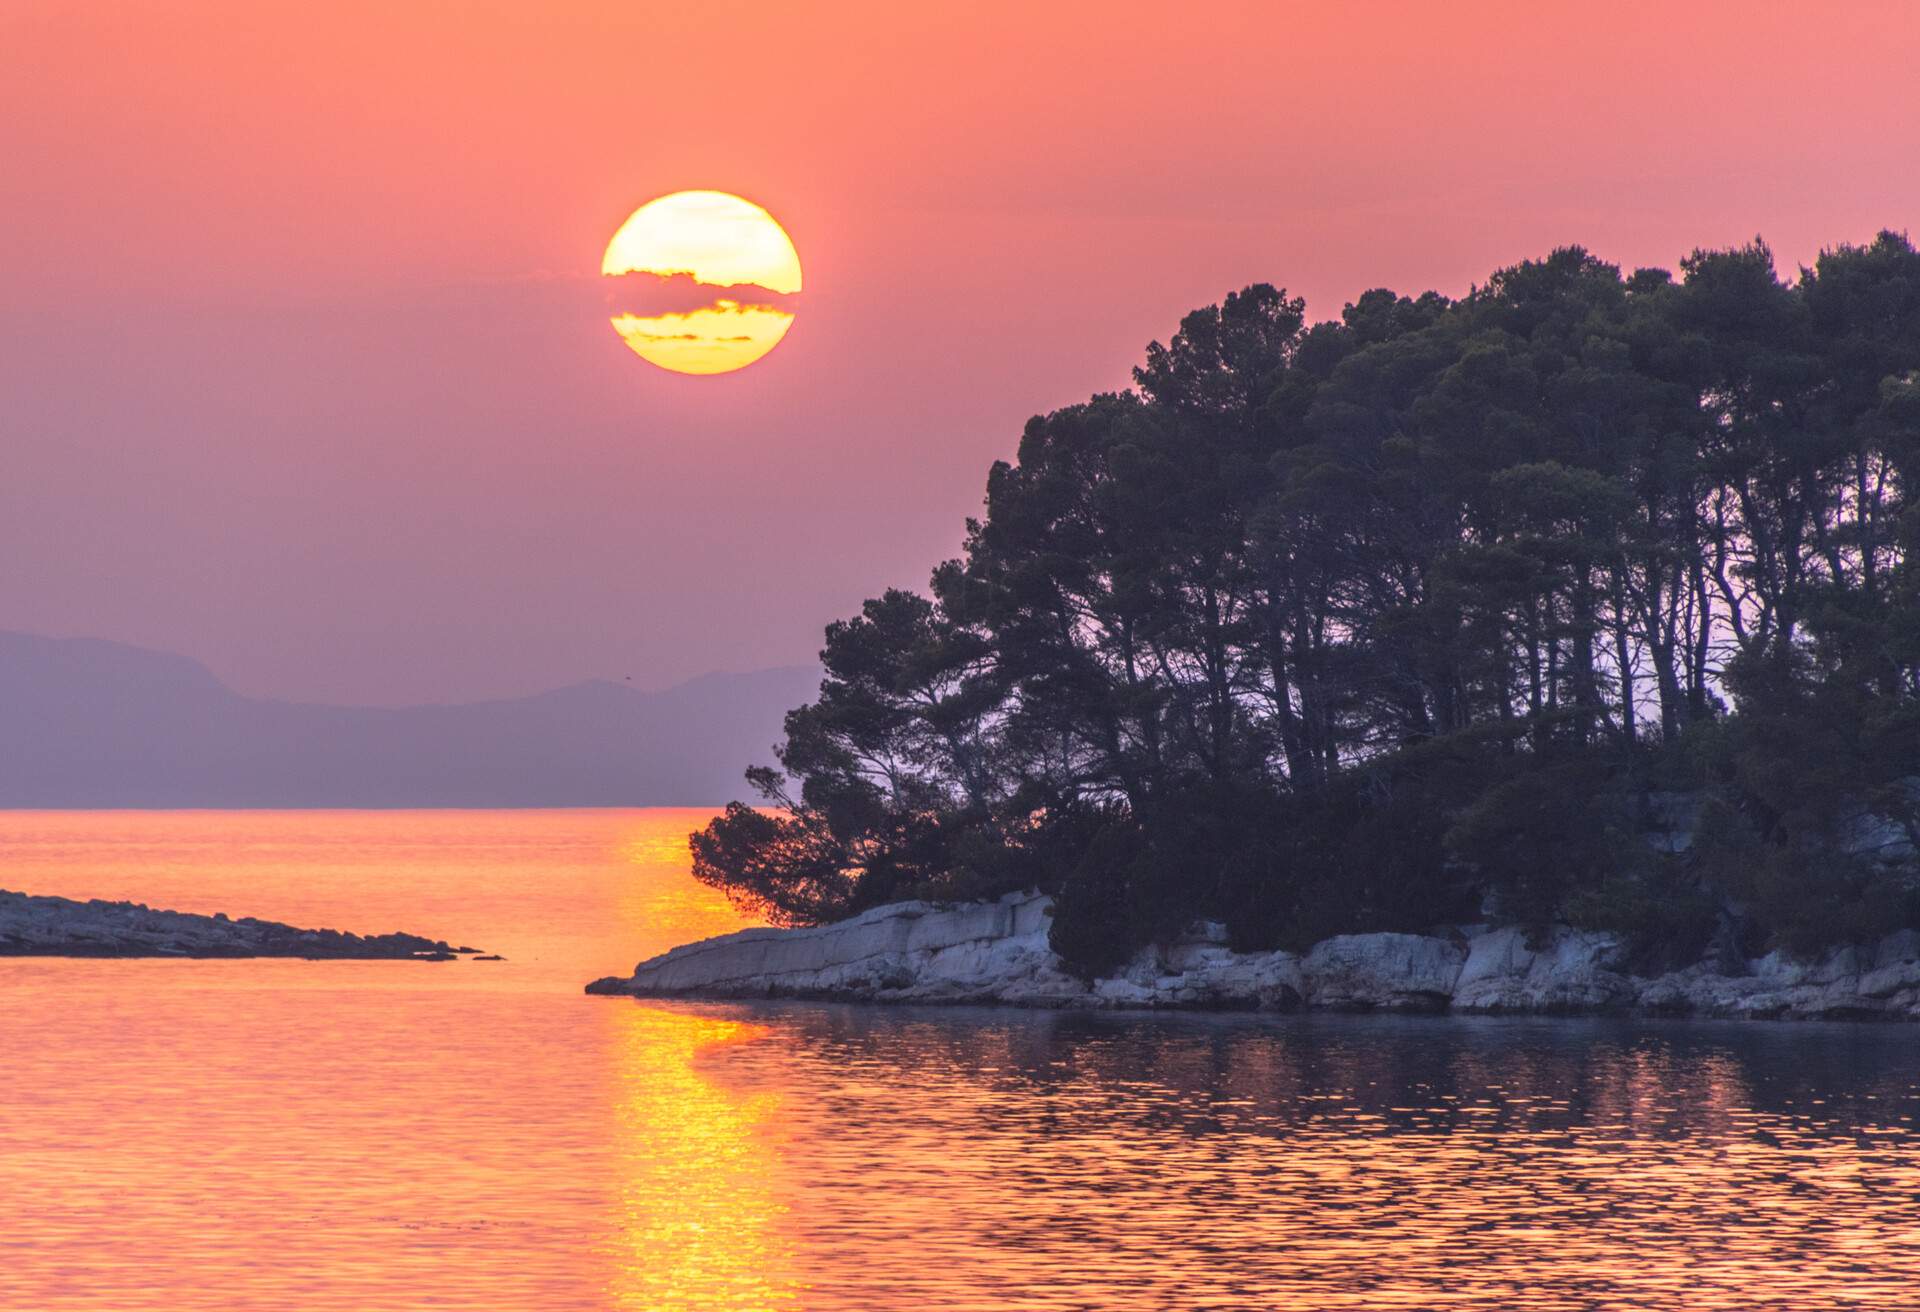 Sunset over the Adriatic sea, as seen on the island of Mljet, in Dalmatia region of Croatia.